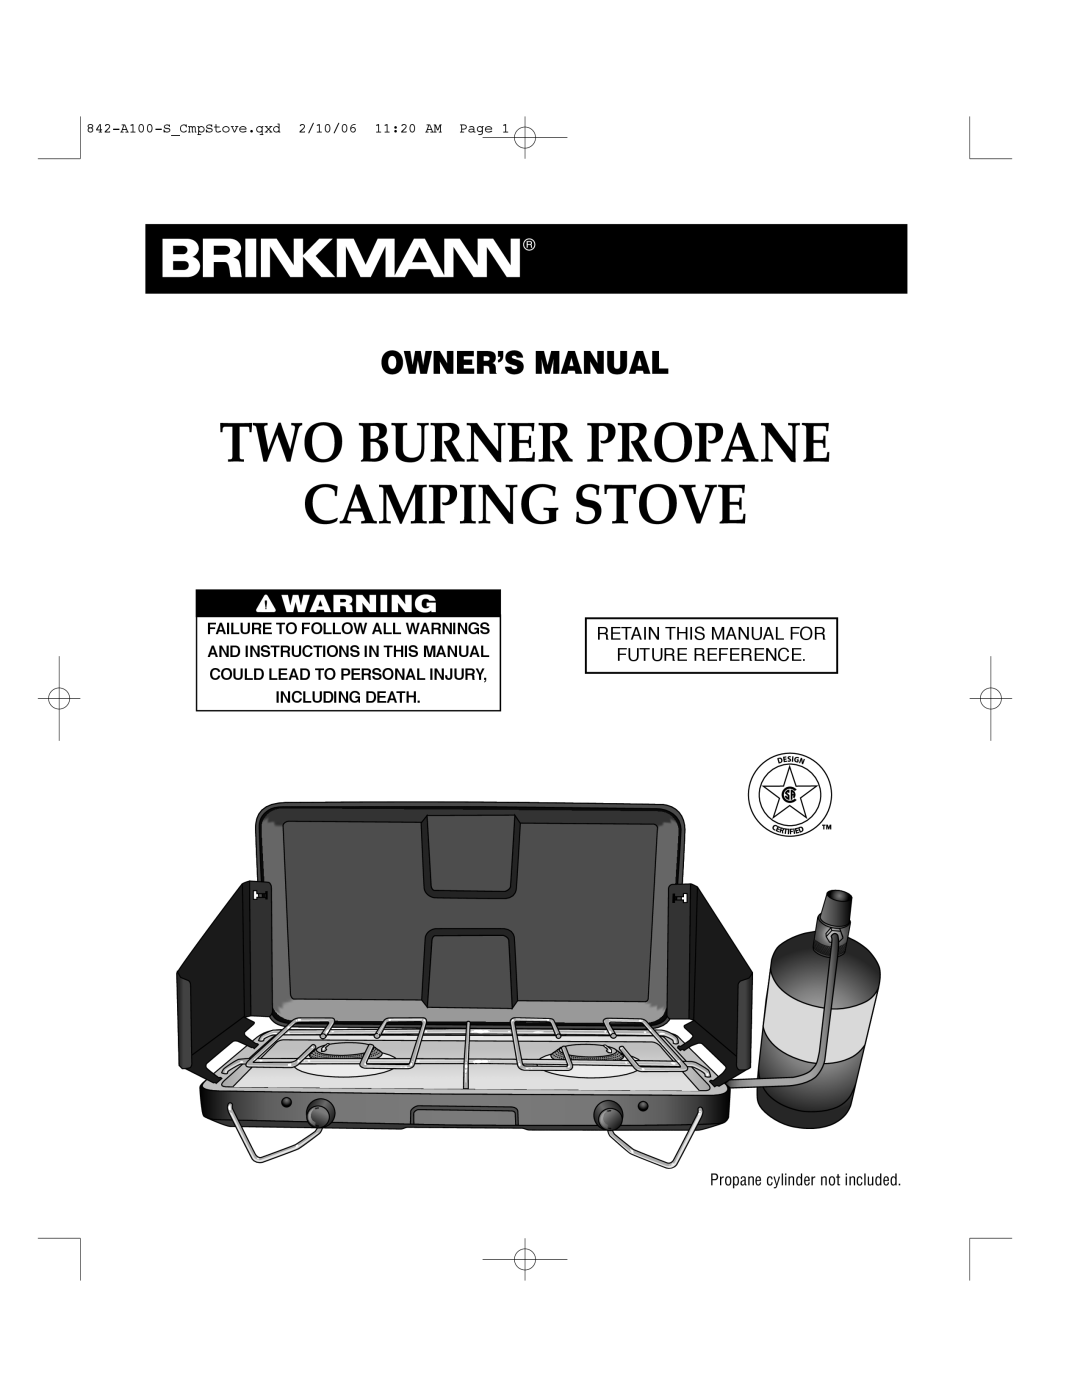 Brinkmann 842-A100-S owner manual Owner’S Manual, Two Burner Propane Camping Stove 